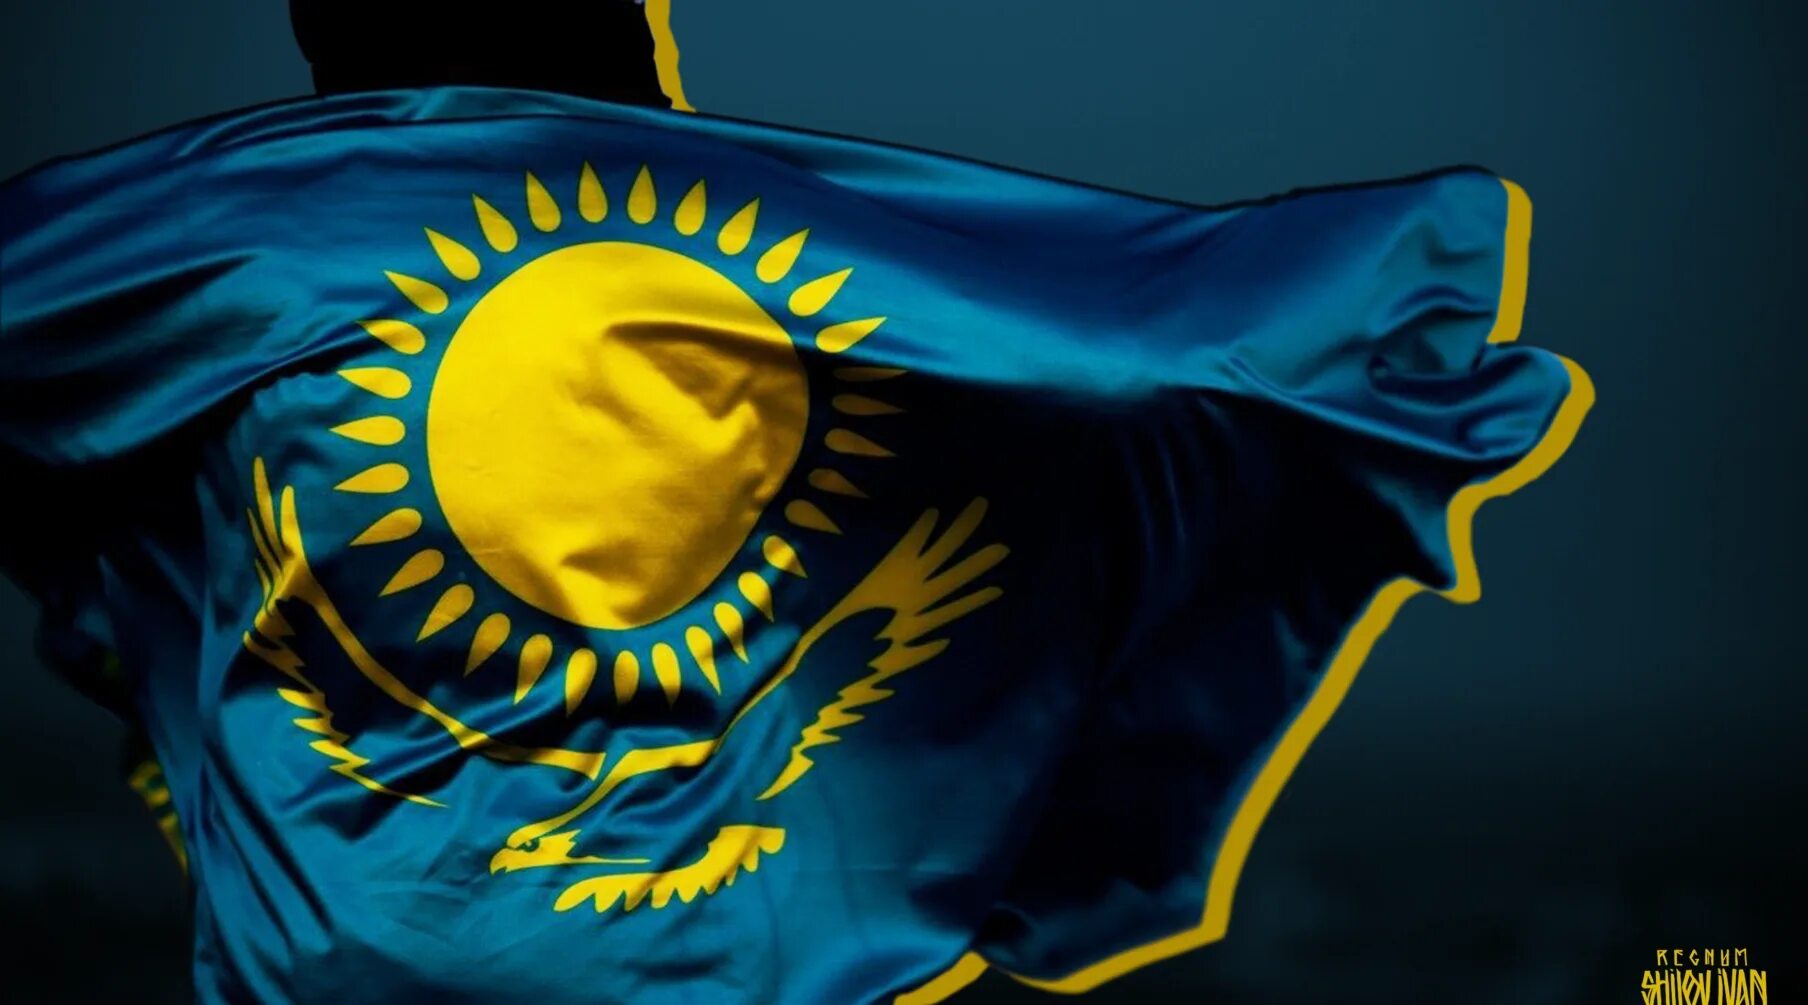 Kazakh videos. Флаг Казахстана. Флаг РК Казахстана. Флаг Казахстана 1992. Беркут на флаге Казахстана.